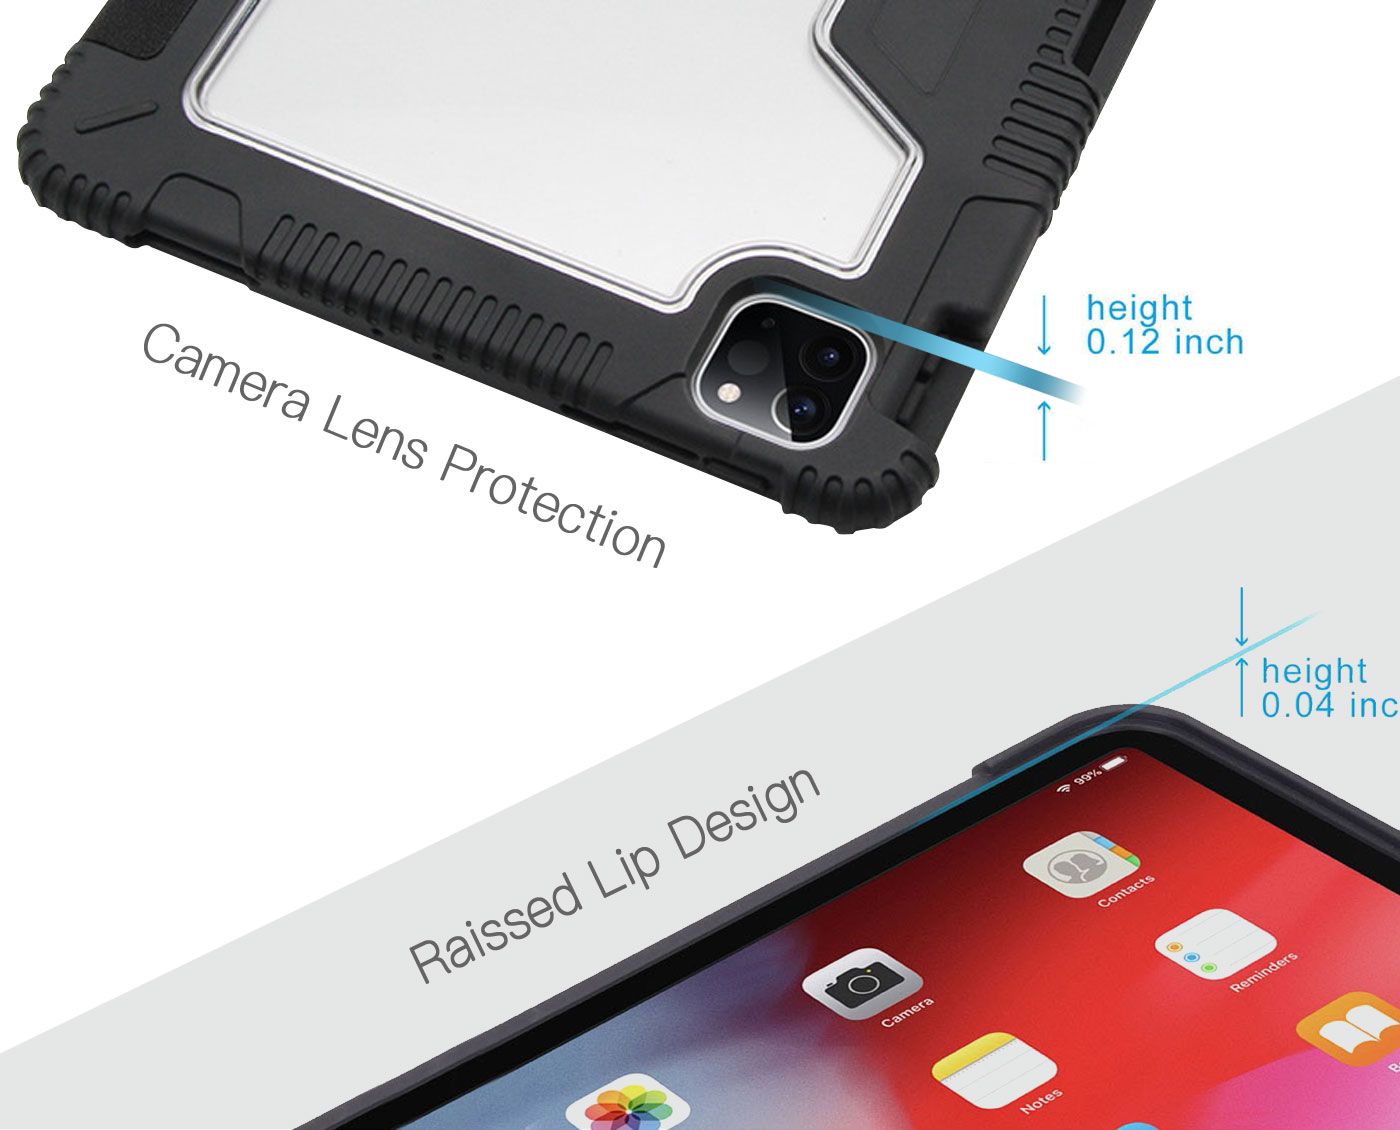 X-Defender Impact Protection iPad Case